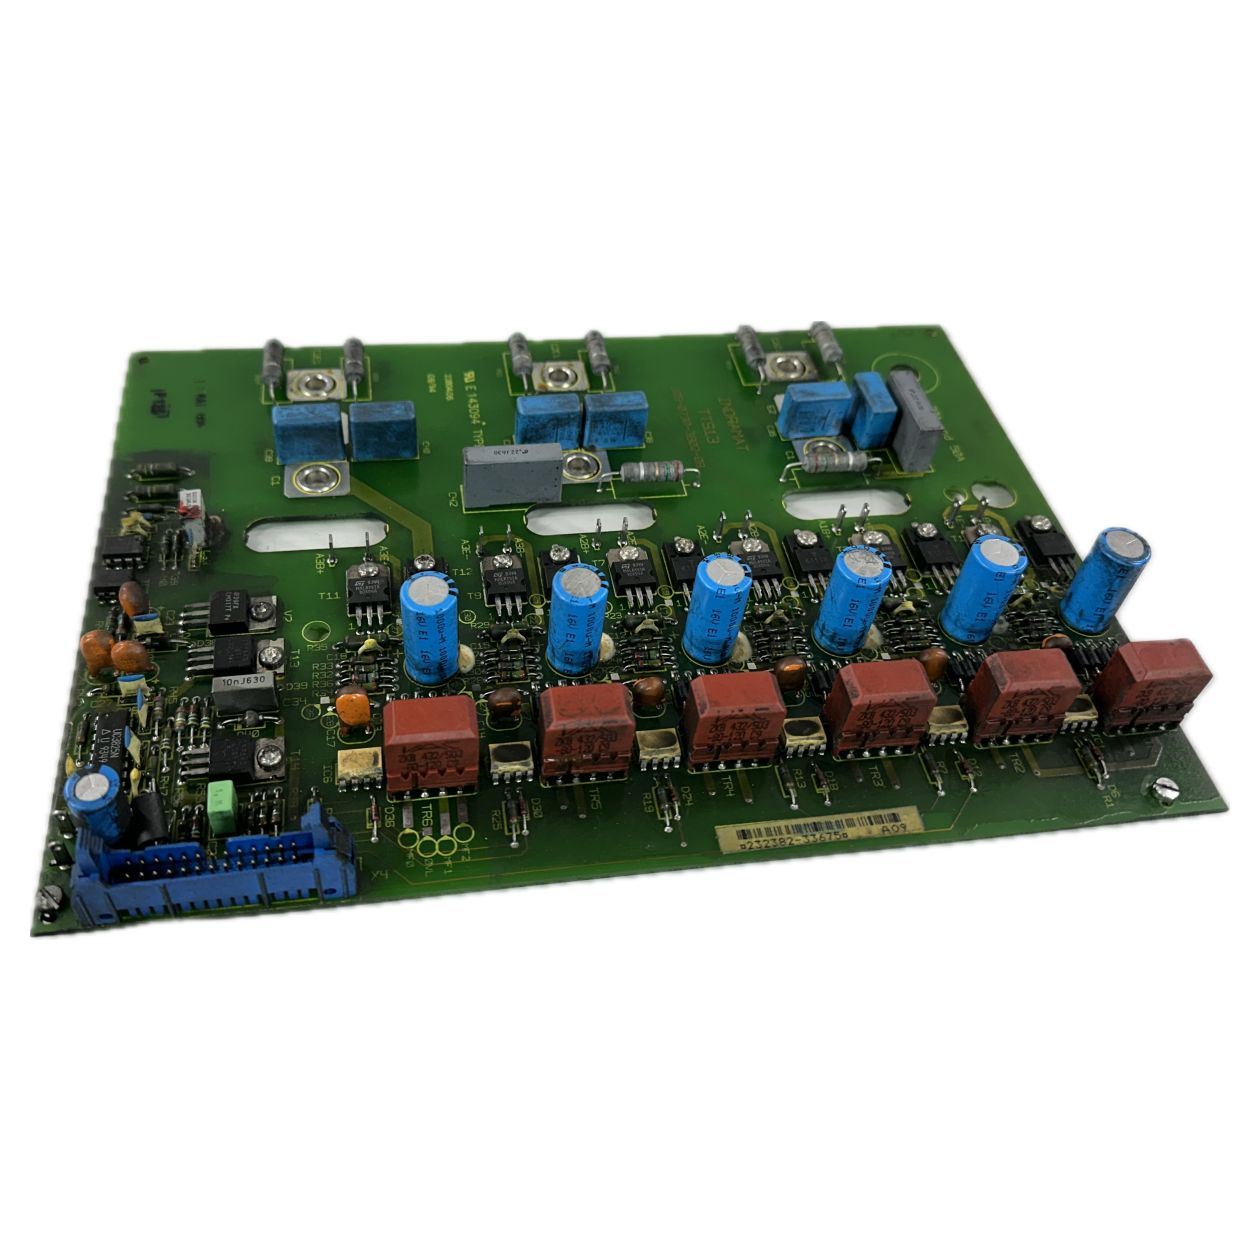 LK2974 Inverter board Frequenzumrichter Platine Indramat TRS13 109-0730-3B02-08